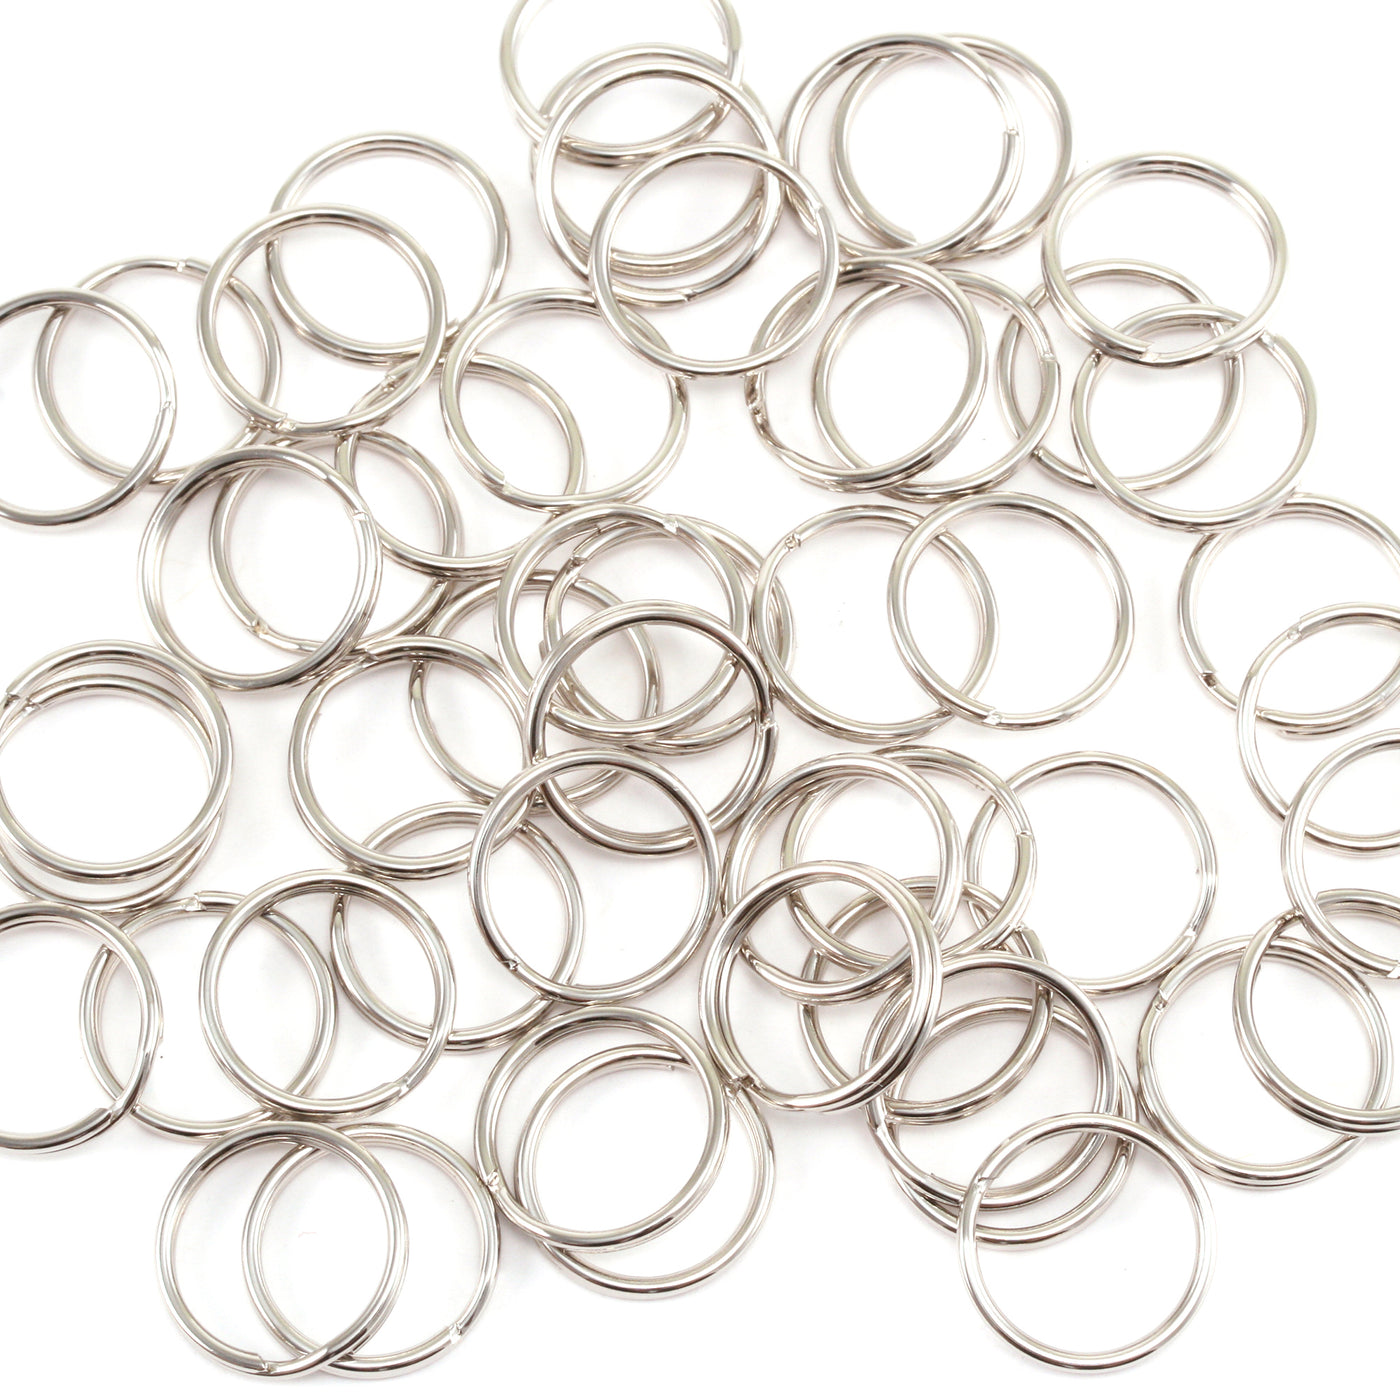  10mm Stainless Steel Jump Rings